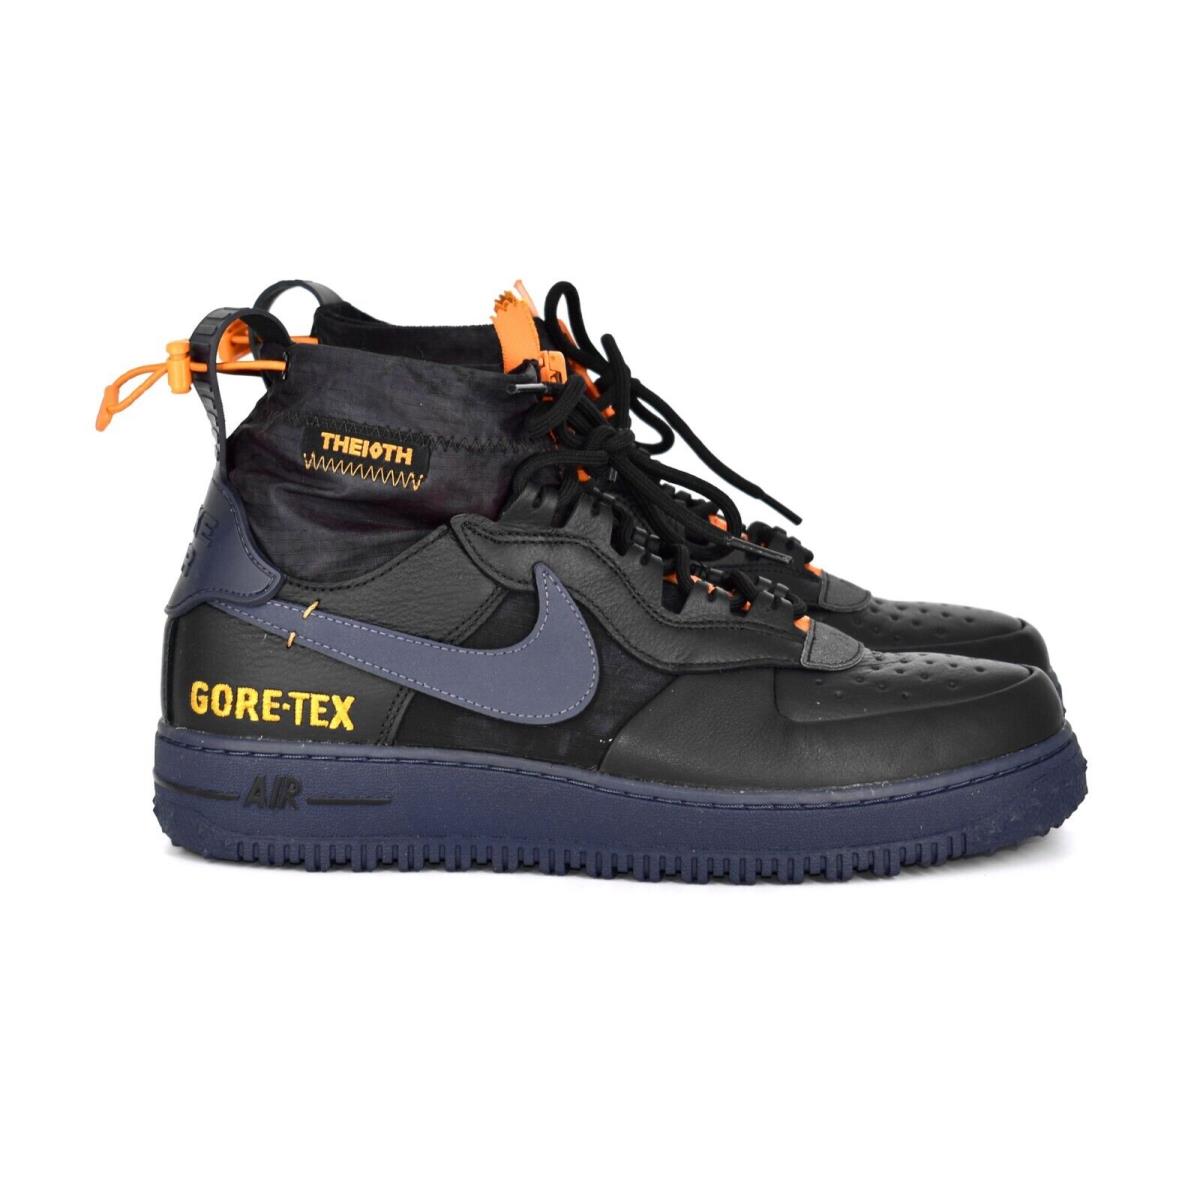 Adular juguete límite G0 Nike Air Force 1 Wtr Gtx Black/thunder Blue Shoes CQ7211-001 Size 9.5 |  883212734778 - Nike shoes Air Force - Black/Thunder Blue | SporTipTop